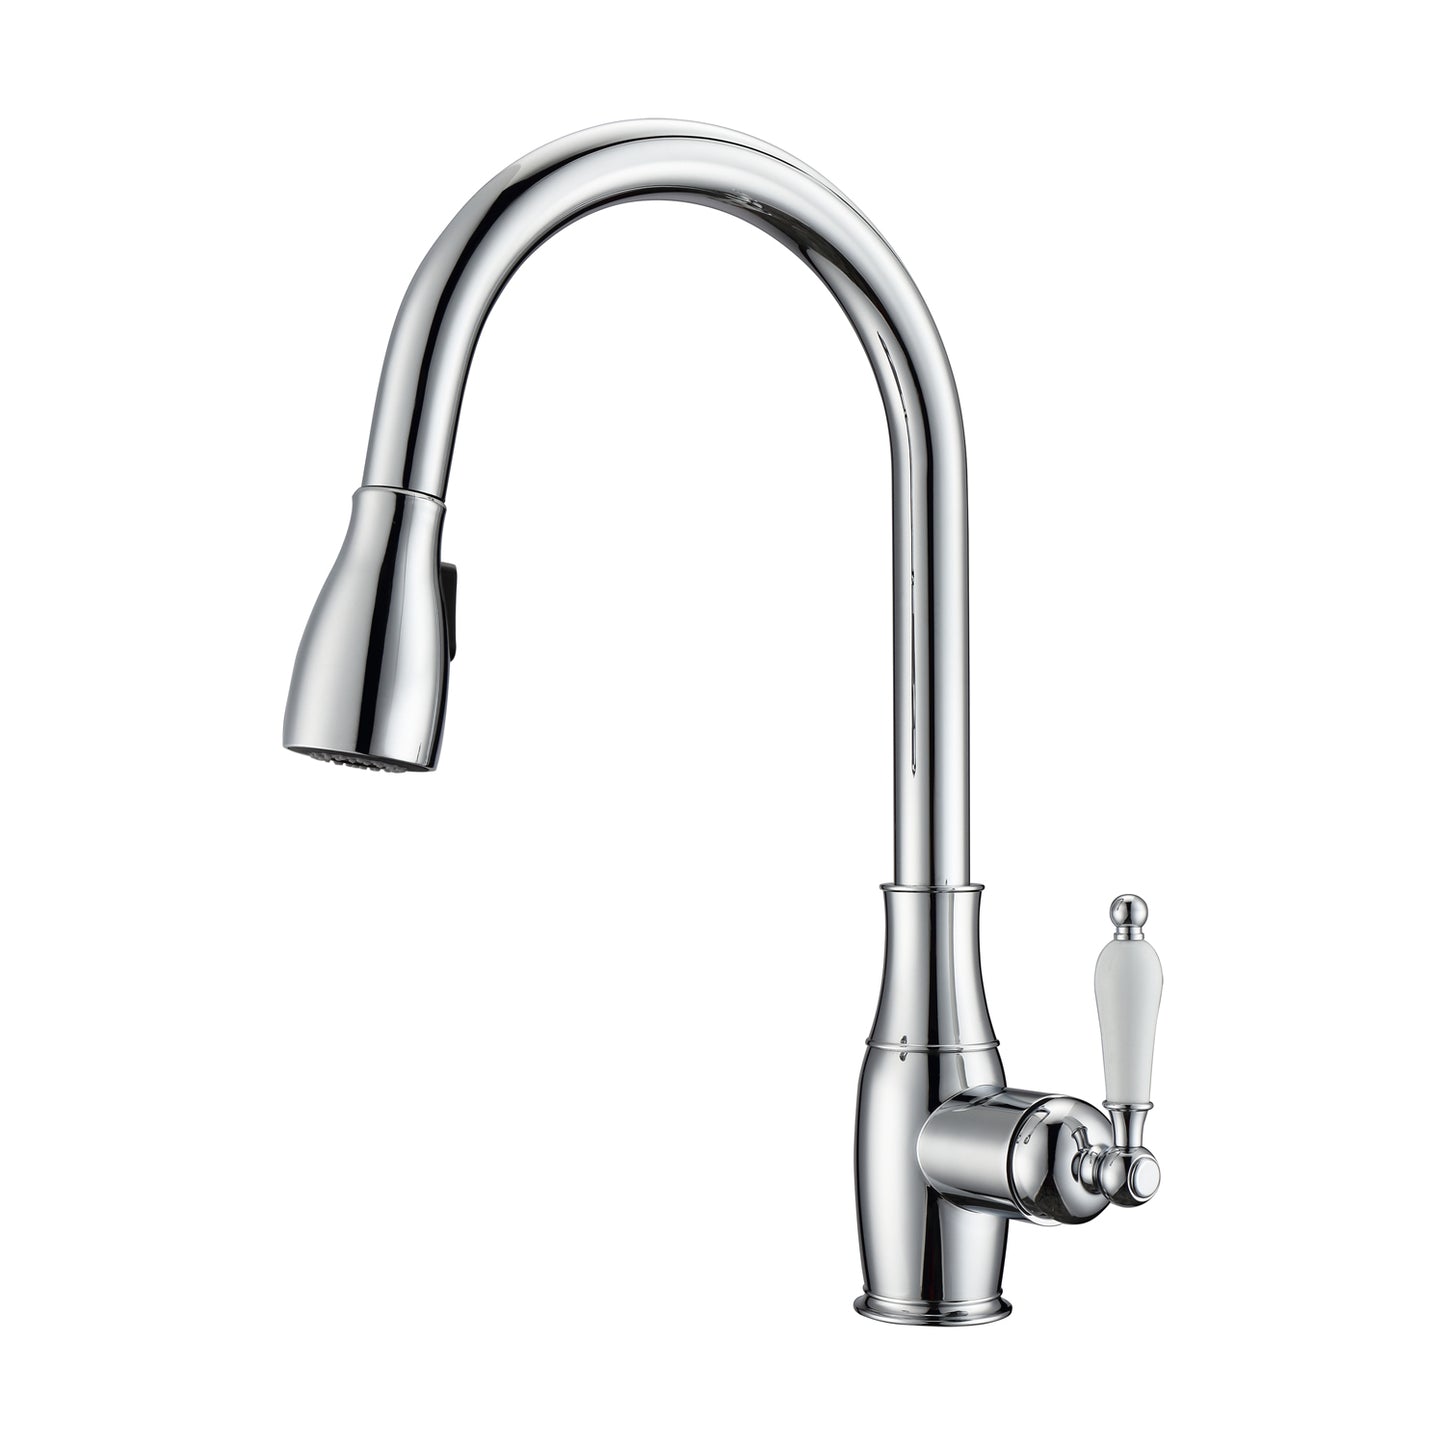 Cullen Kitchen Faucet, Pull-Out Sprayer, Single Porcelain Lever Handle, Chrome